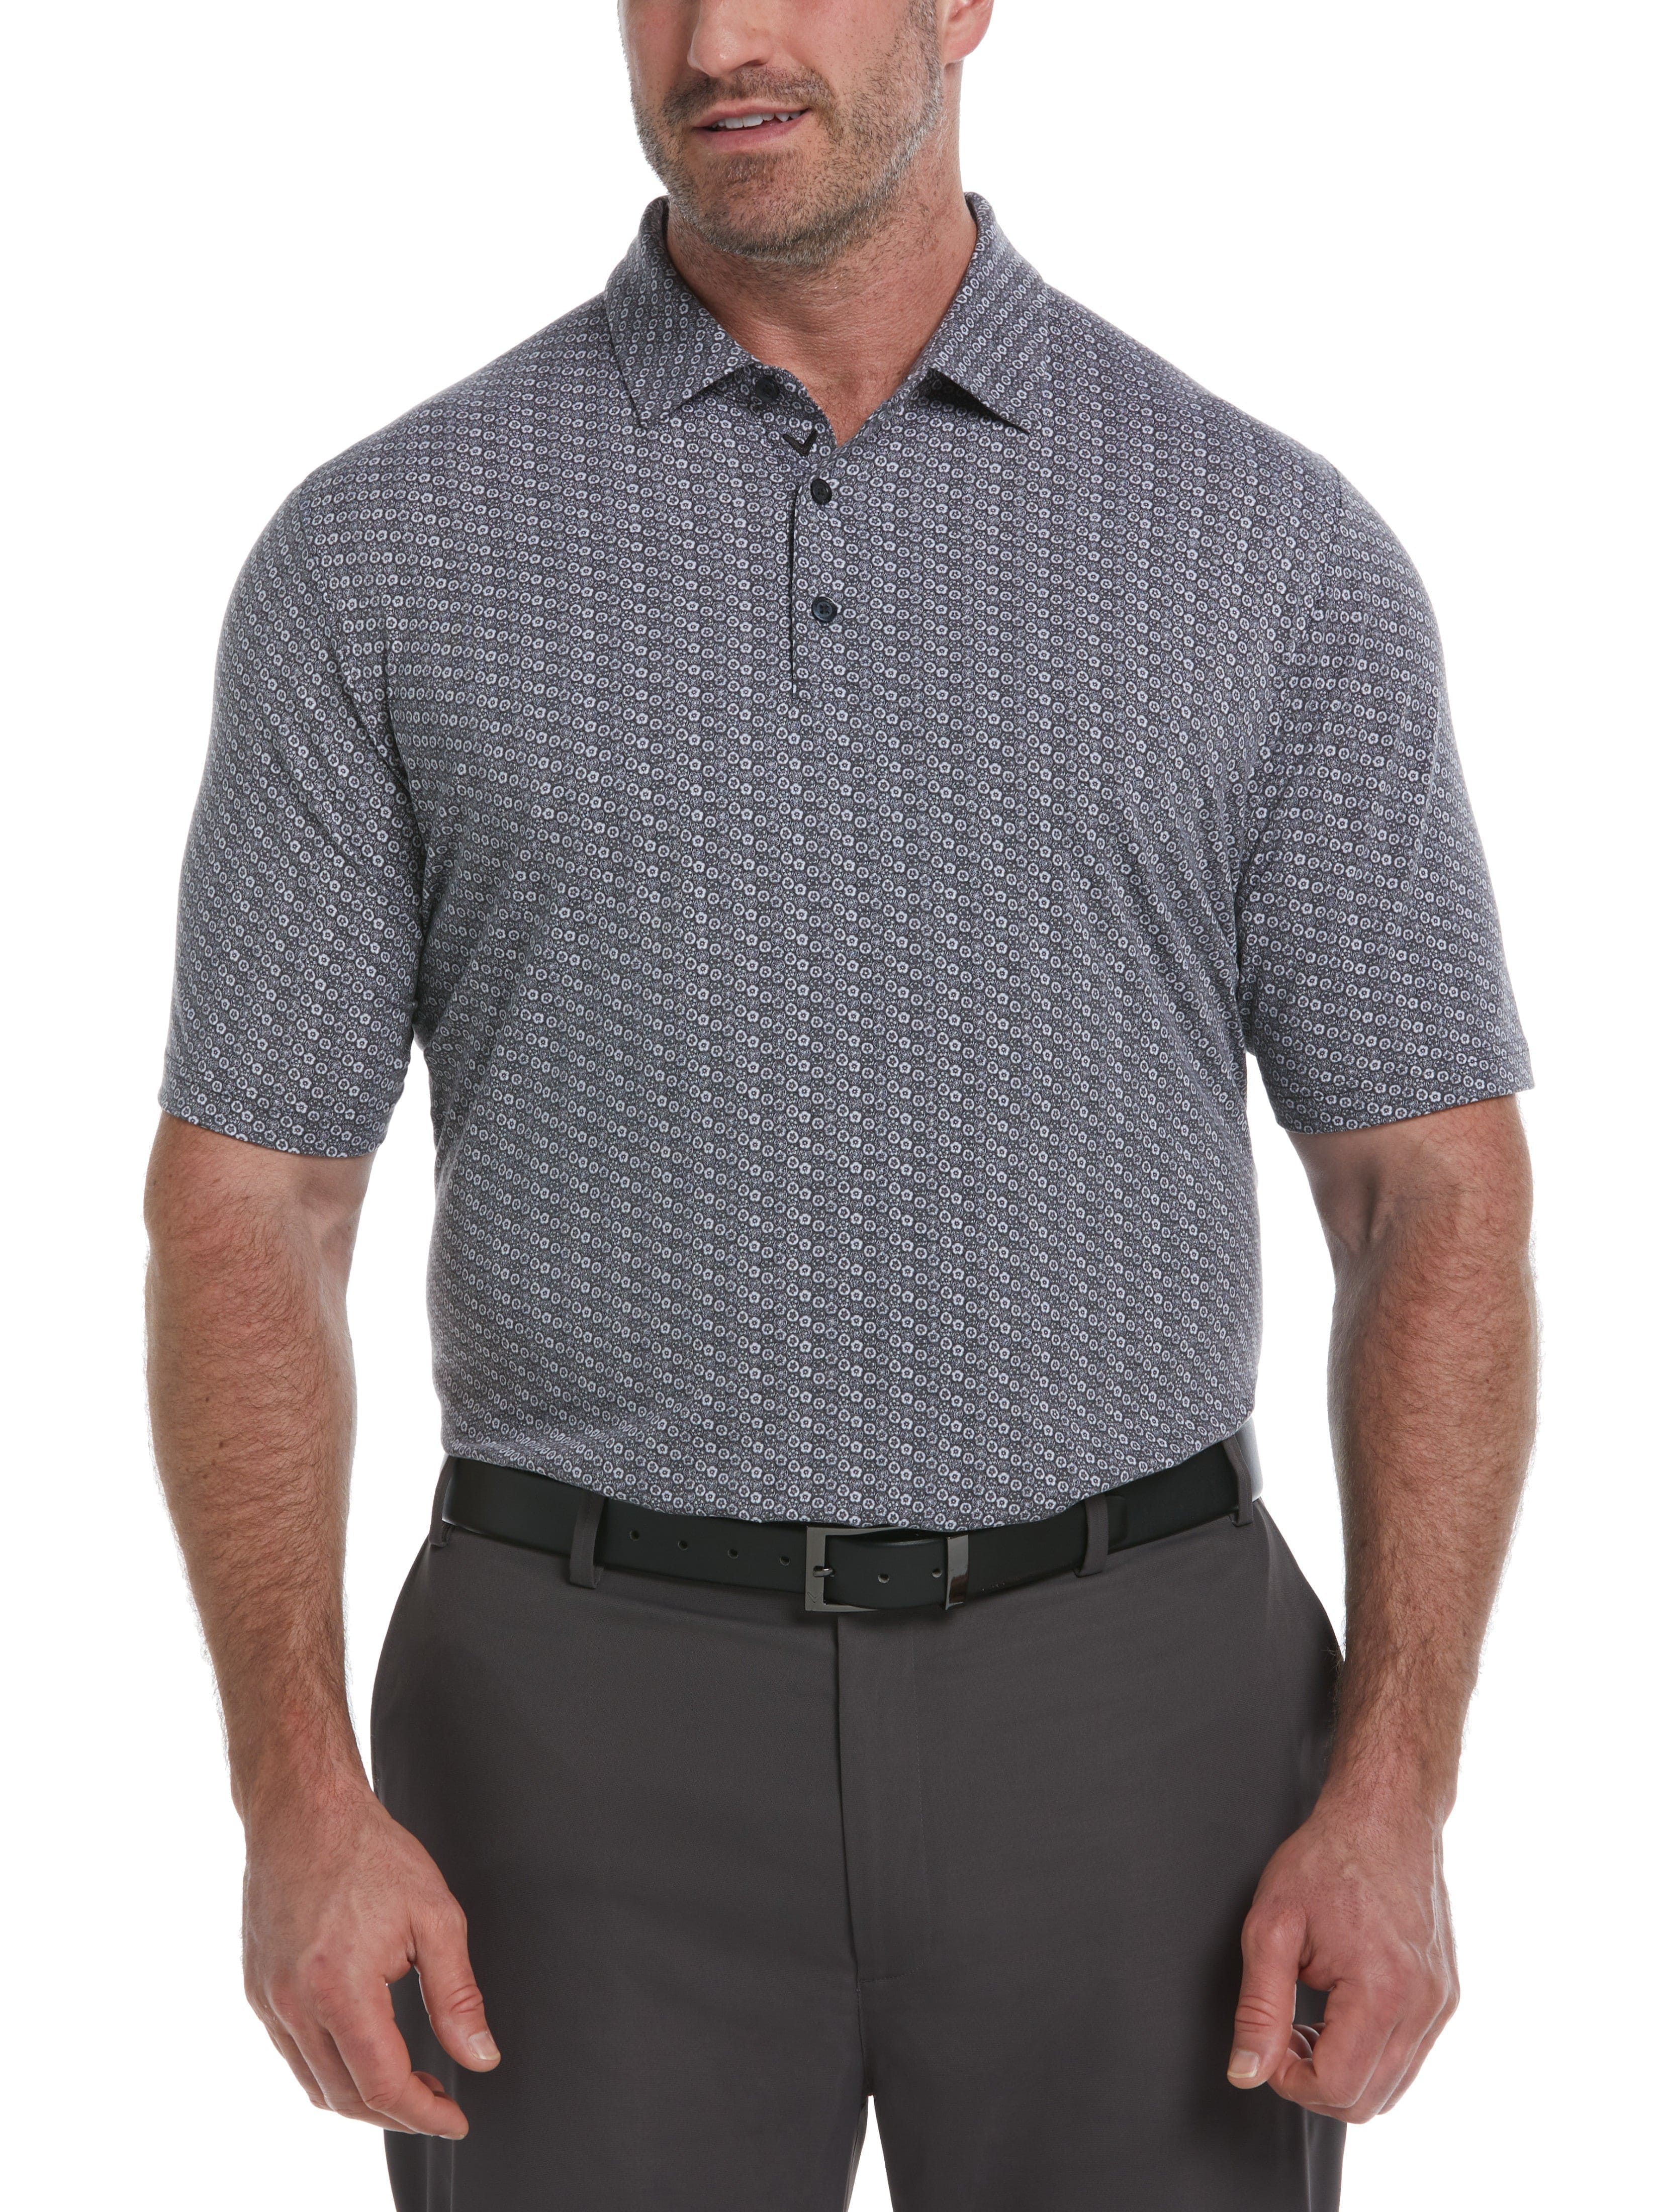 Callaway Apparel Mens Big & Tall Allover Tie Dye Foulard Print Golf Polo Shirt, Size 1X, Black, Polyester/Cotton/Elastane | Golf Apparel Shop